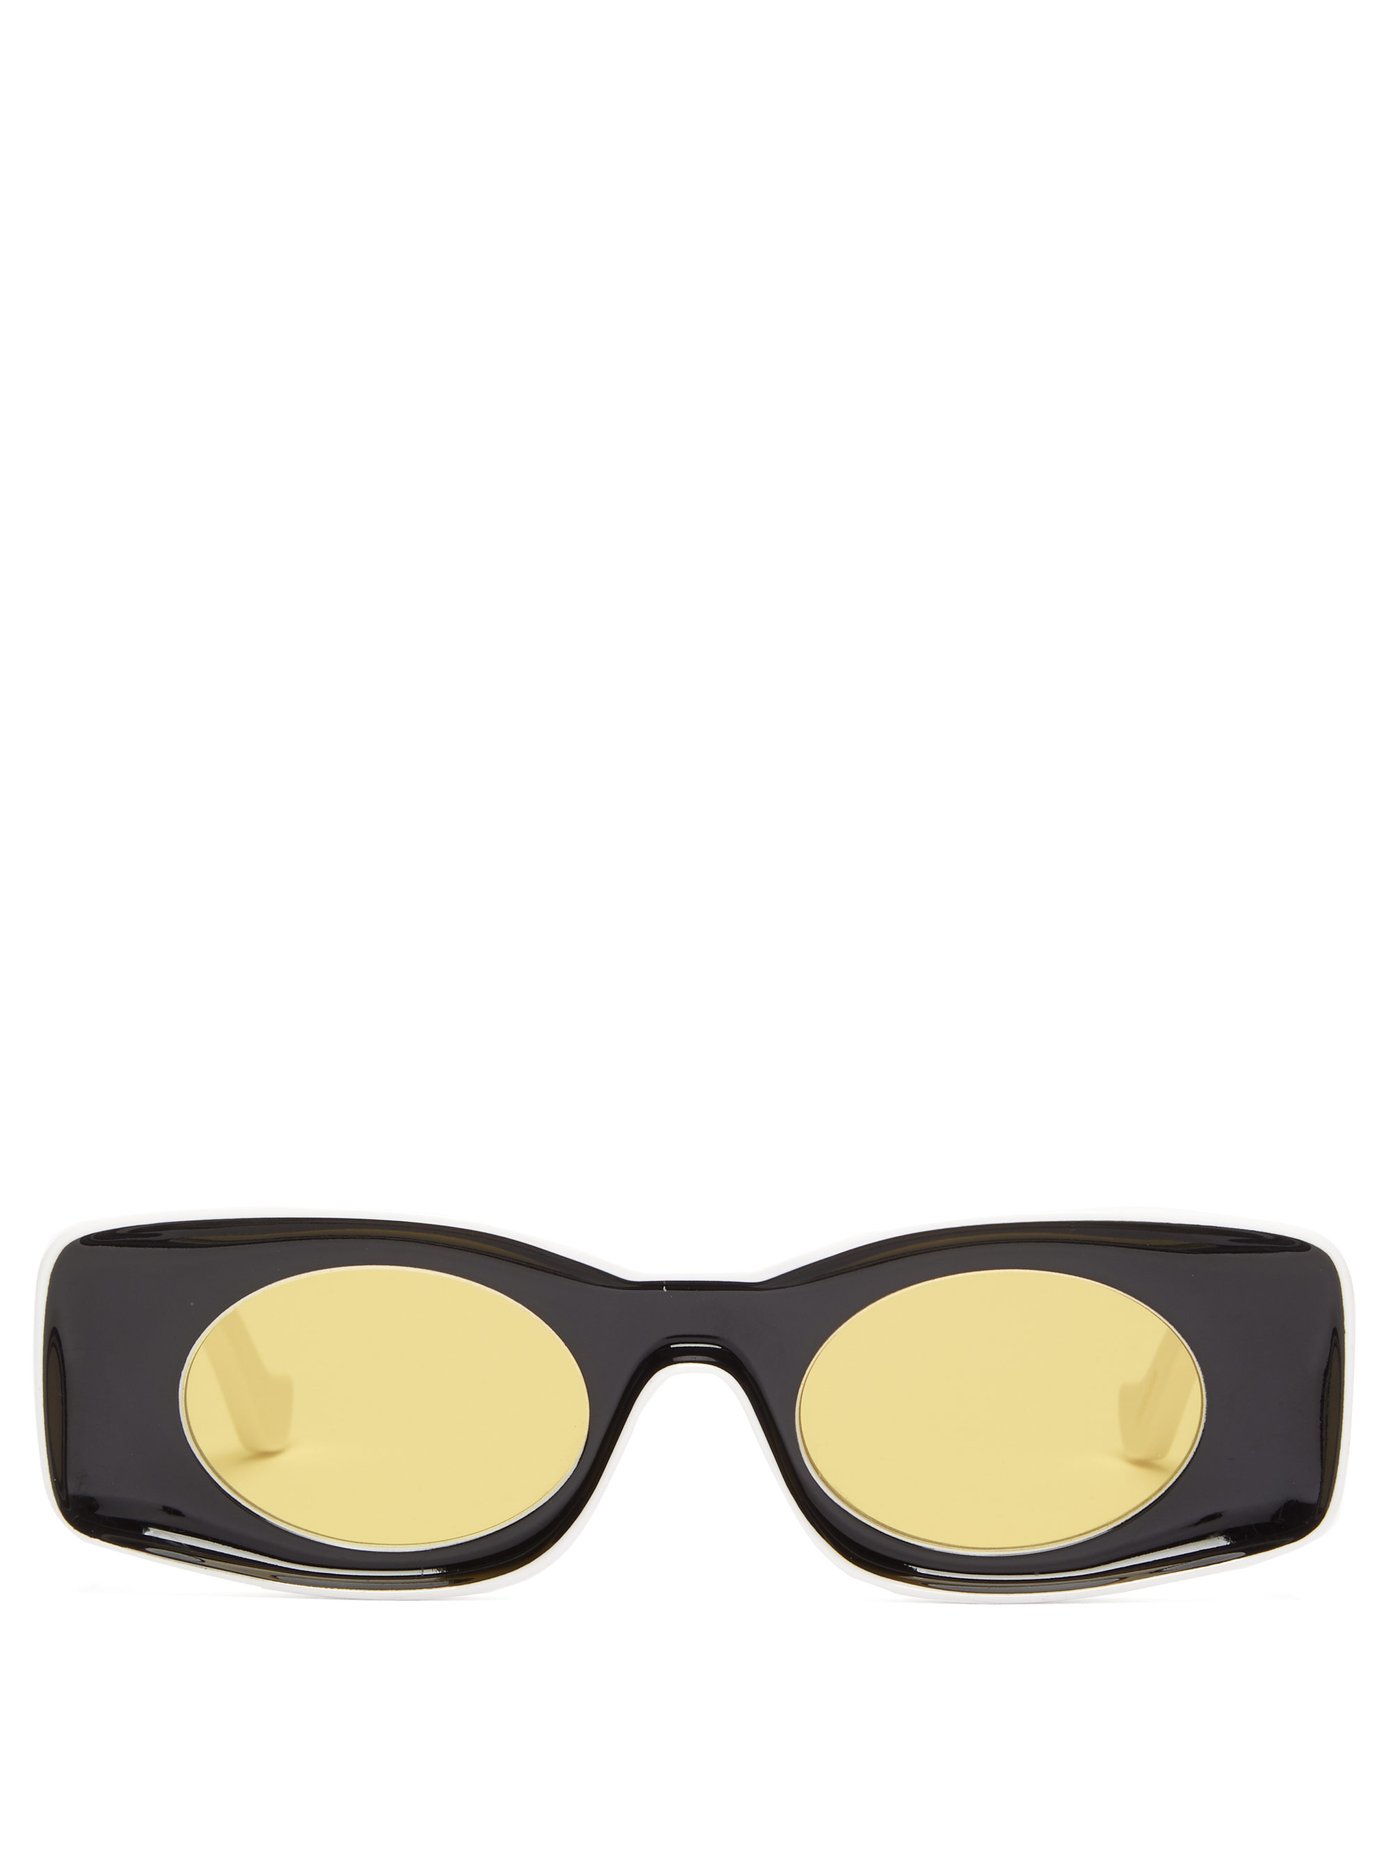 loewe sunglasses sale online -